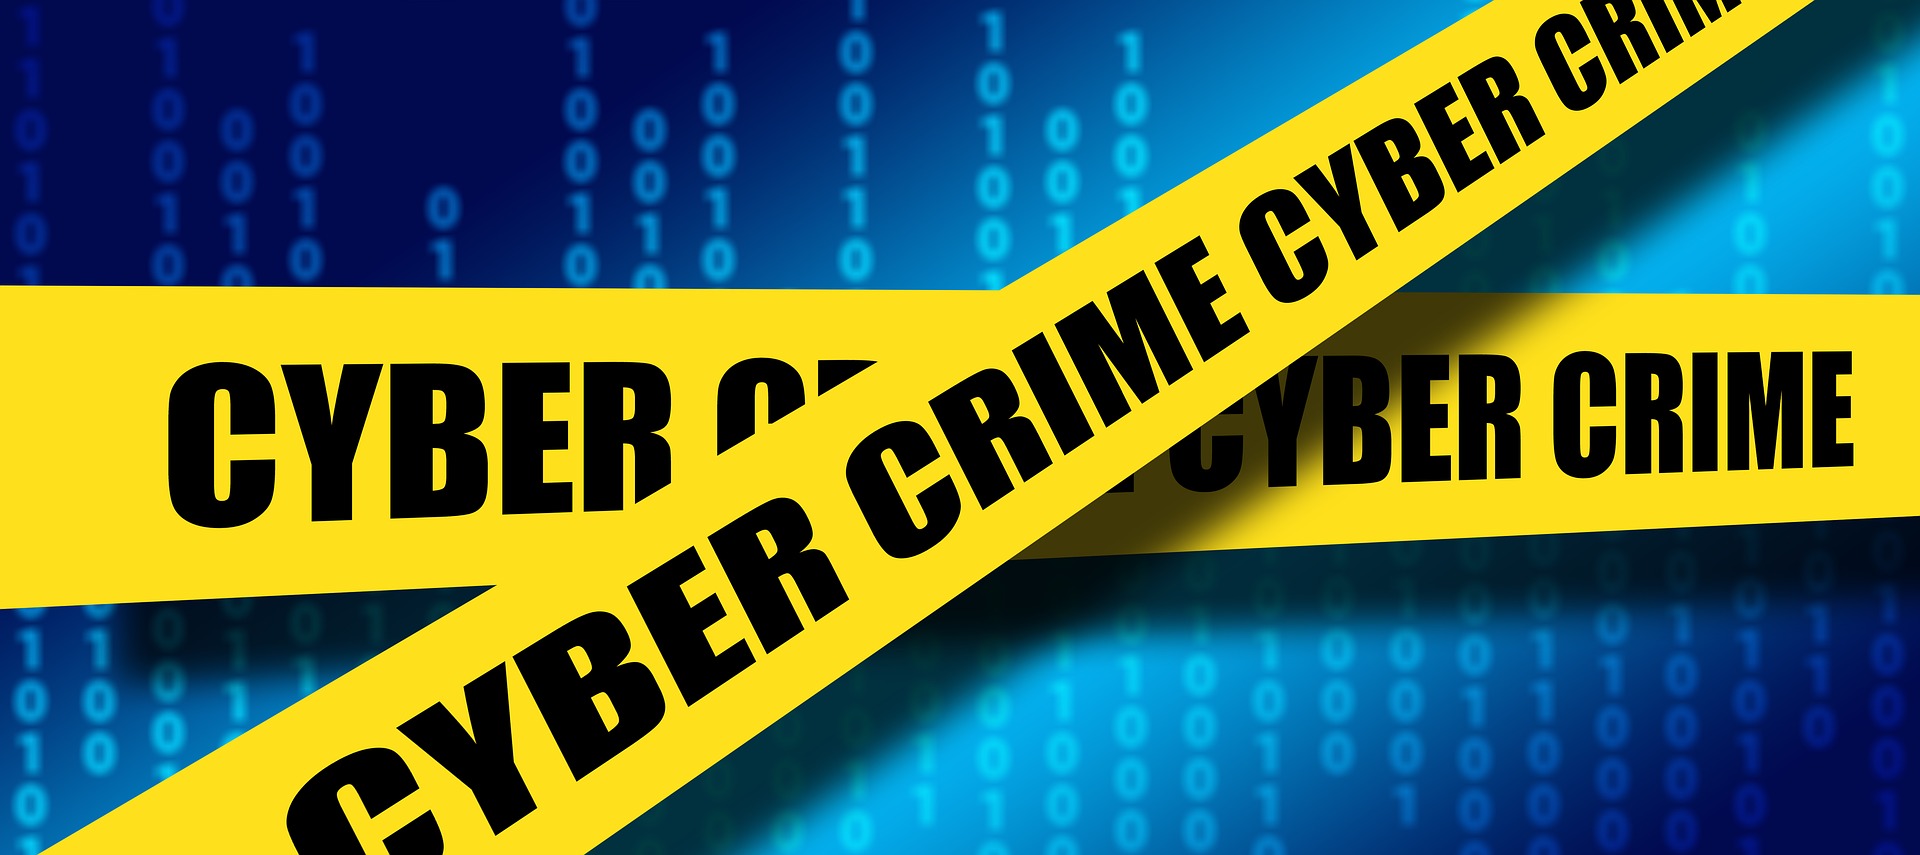 Crime Cyber Crime Hacking 